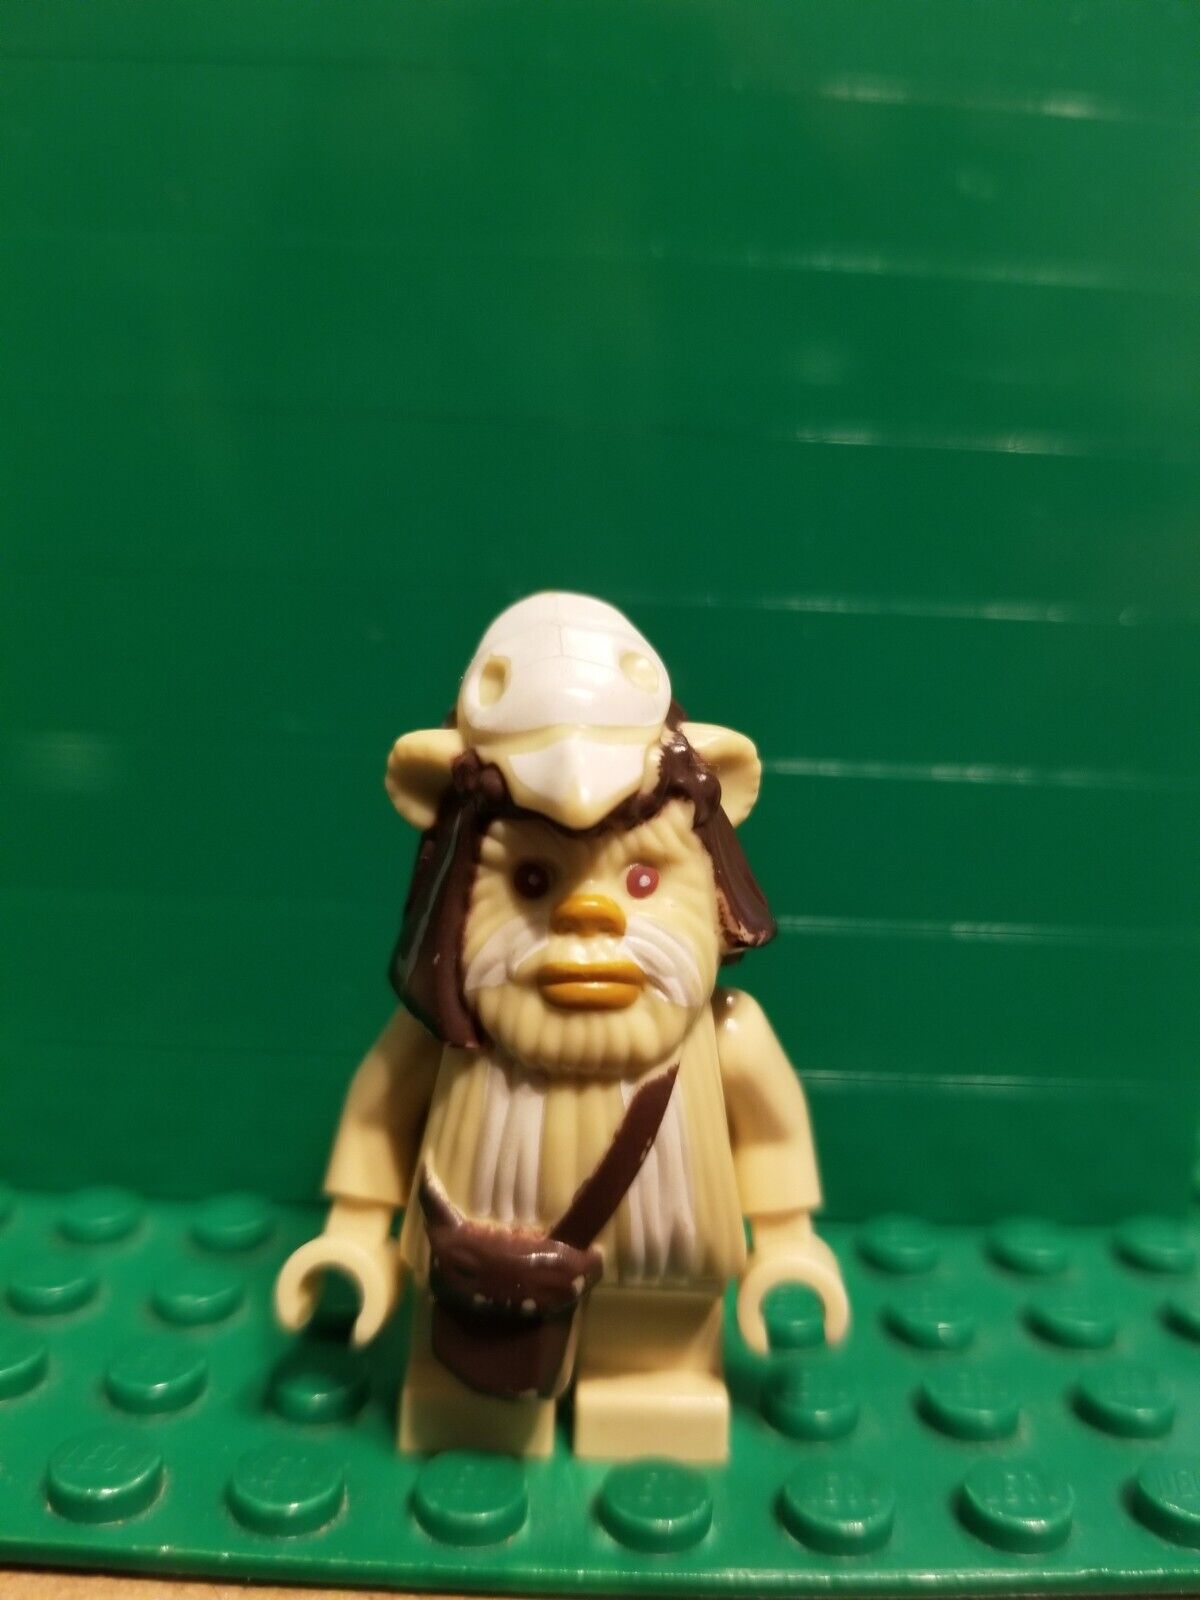 LEGO Star Wars Logray Ewok Minifigure sw0338 7956 10236 Ewok Attack